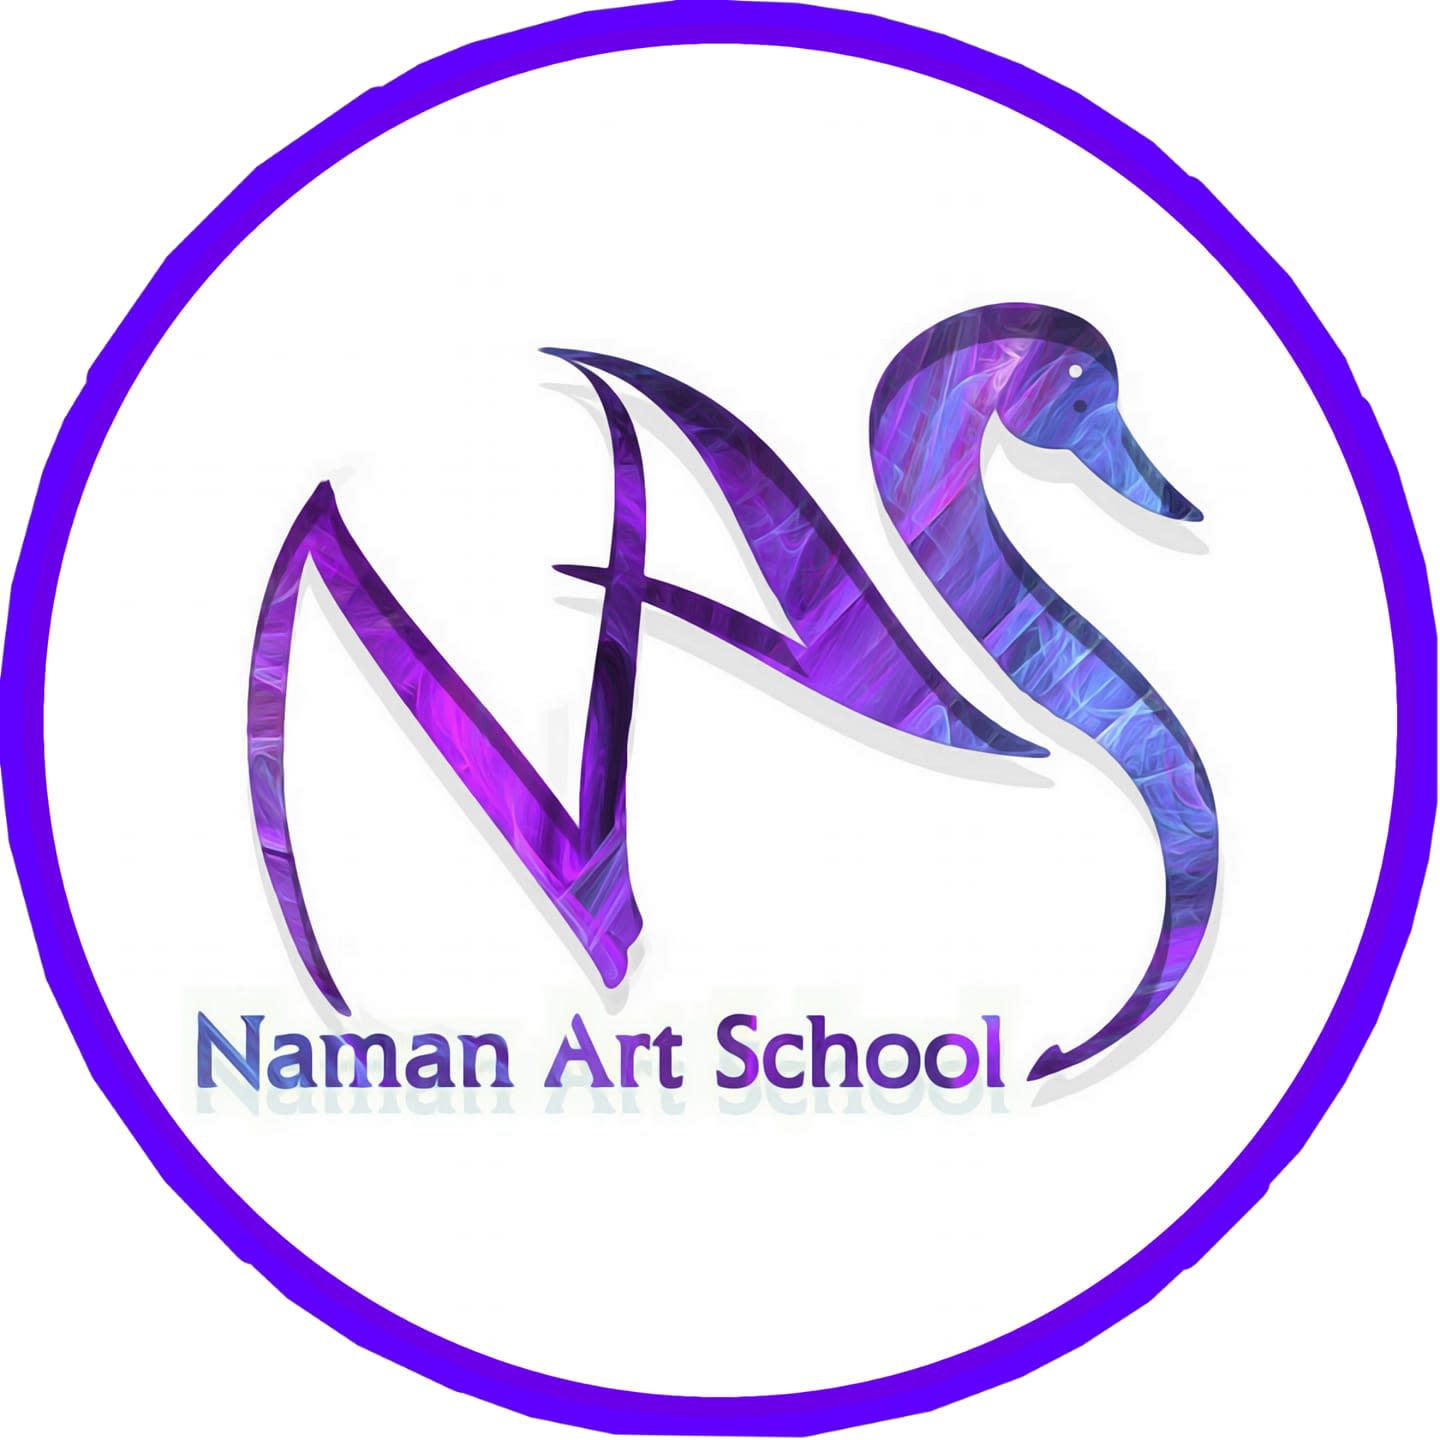 Naman Art School